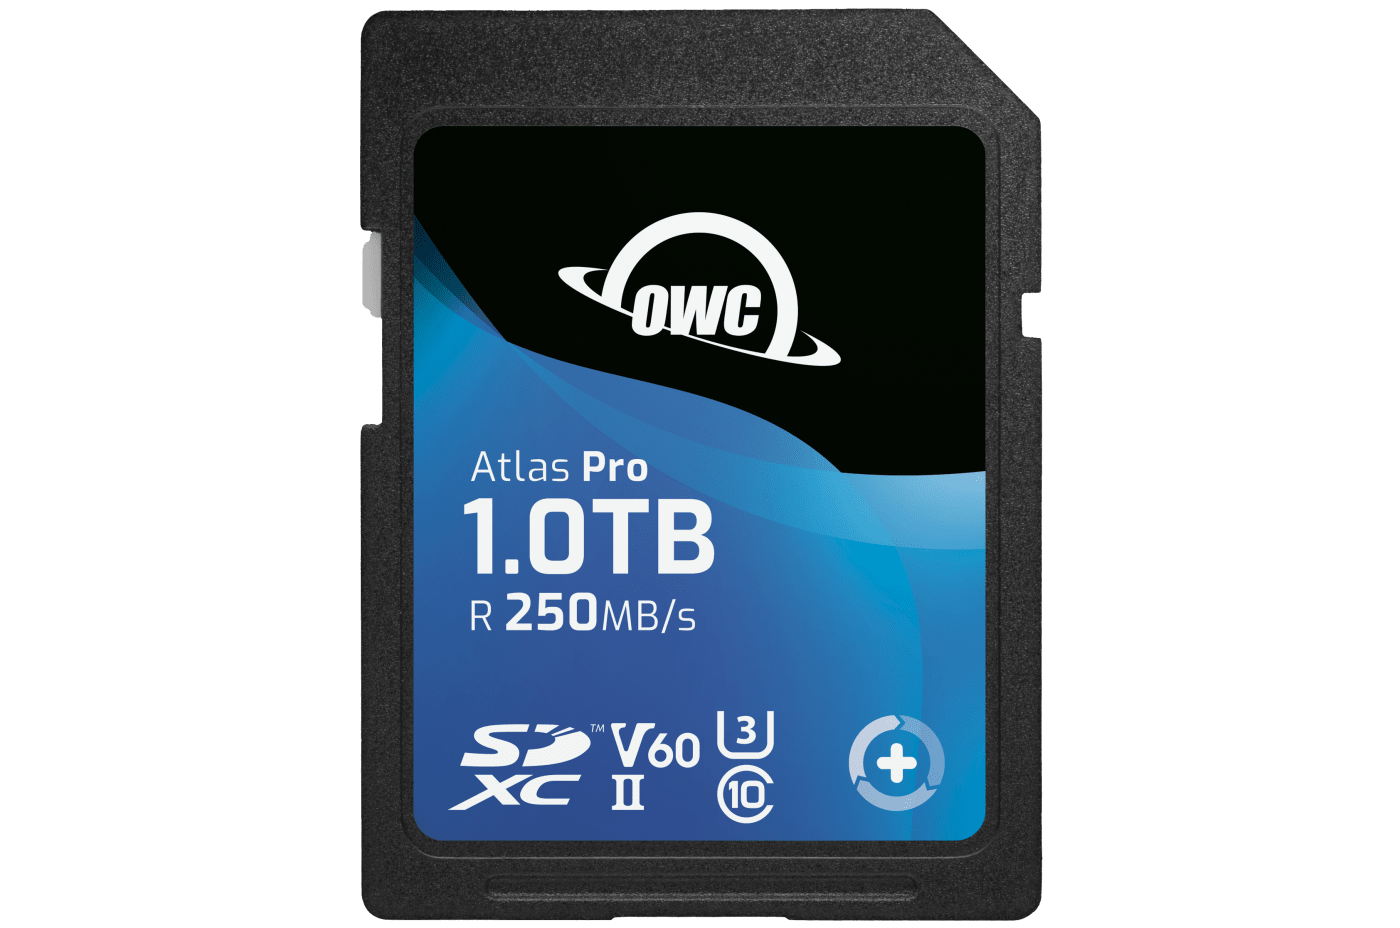 1TB OWC Atlas Pro SD Memory Card